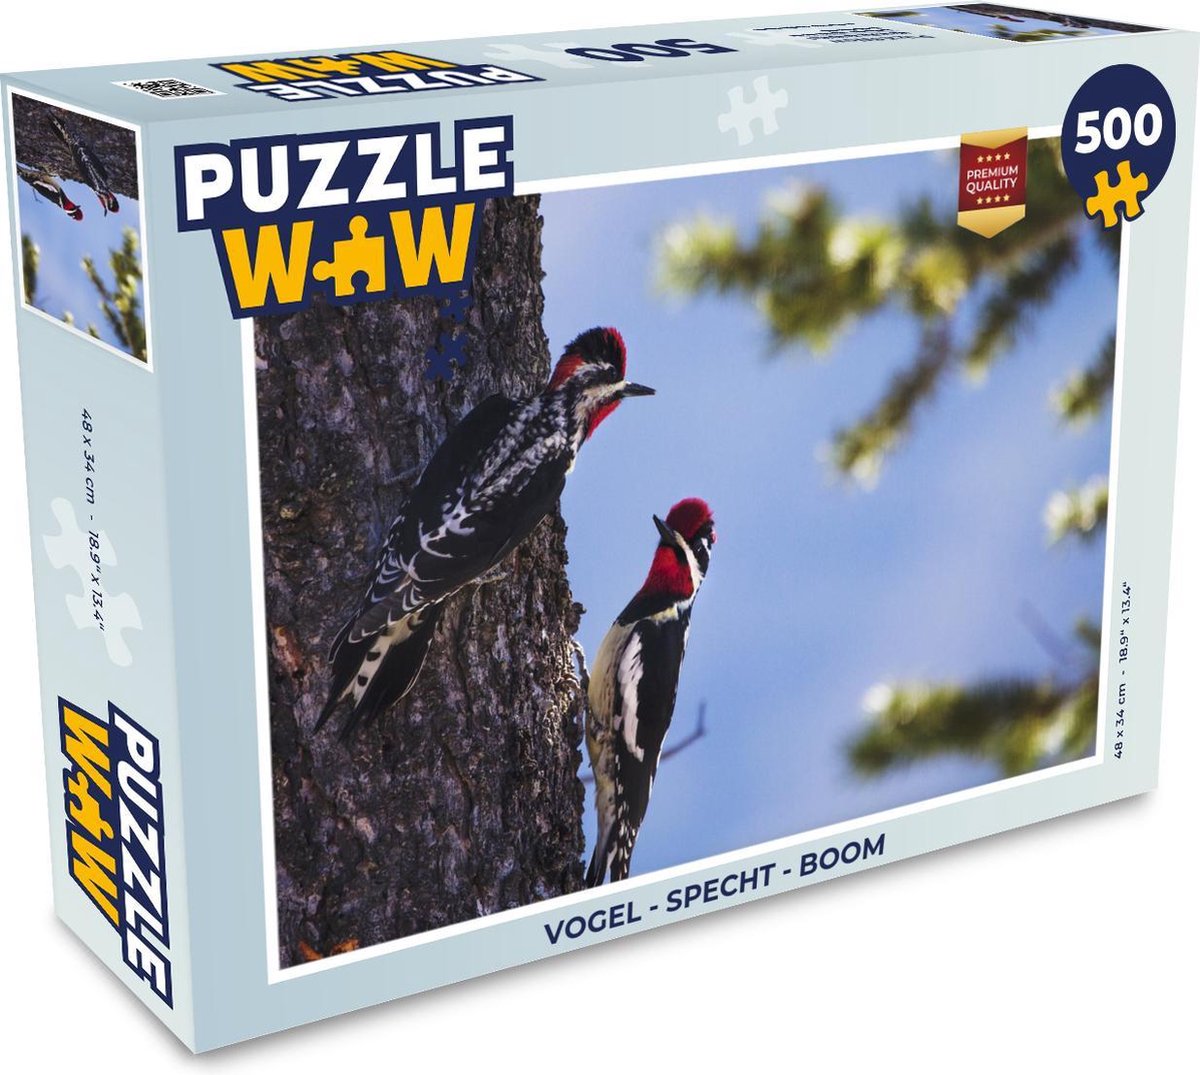 Afbeelding van product PuzzleWow  Puzzel Vogel - Specht - Boom - Legpuzzel - Puzzel 500 stukjes